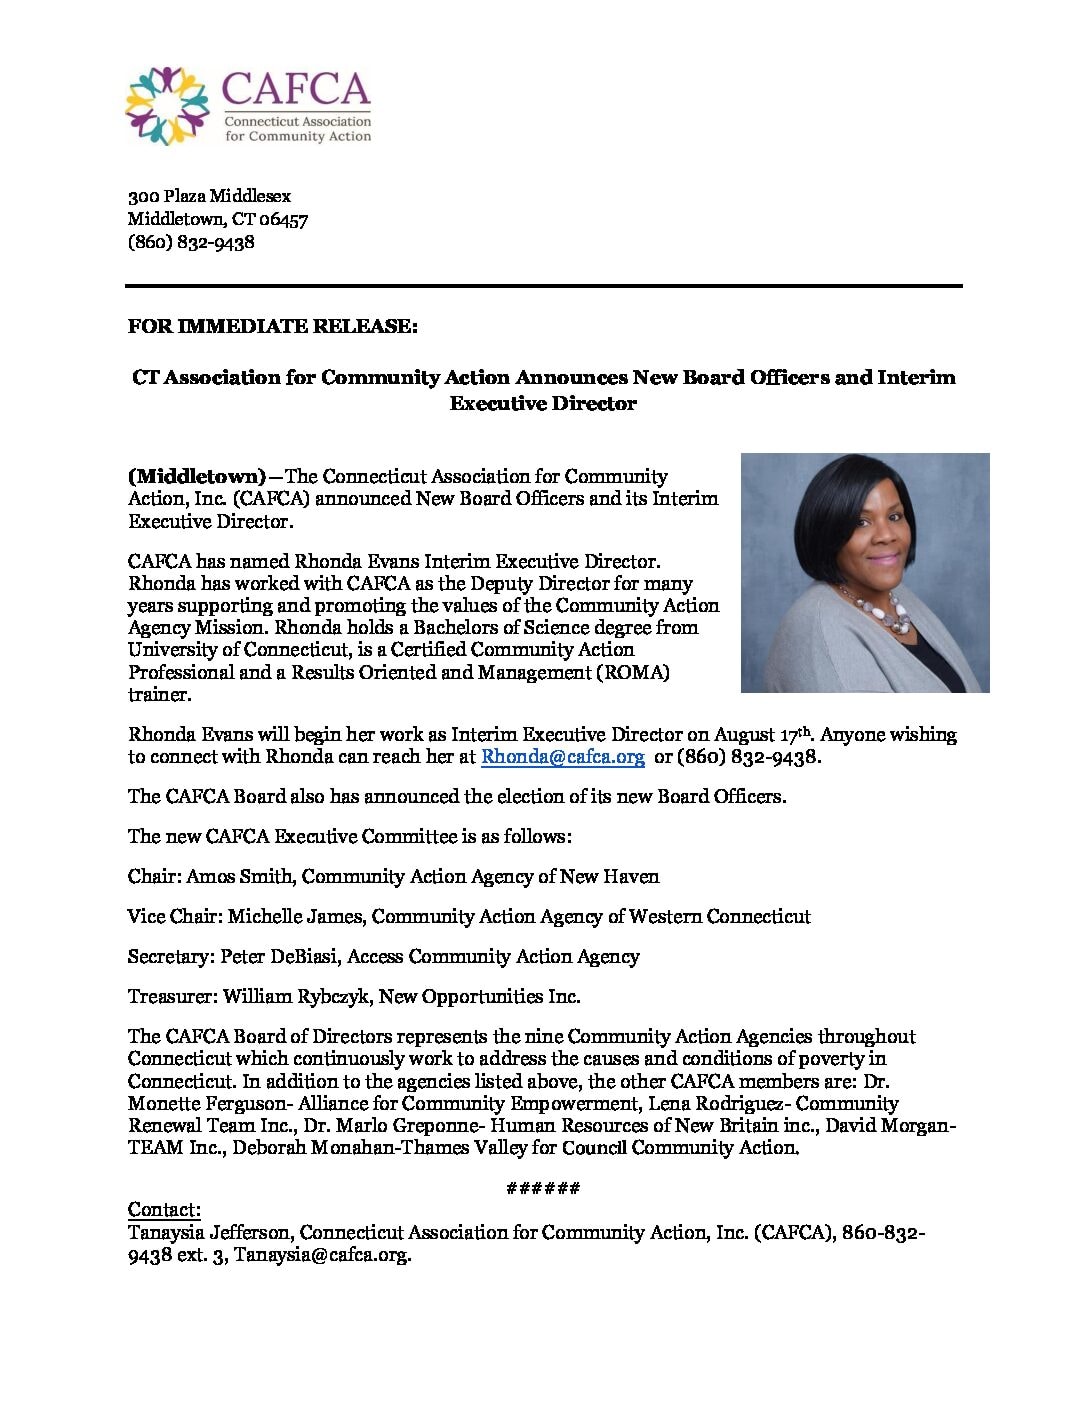 CAFCA Press Release-CAFCA Announces New Board Officers and Interim Executive Director_1 (1)